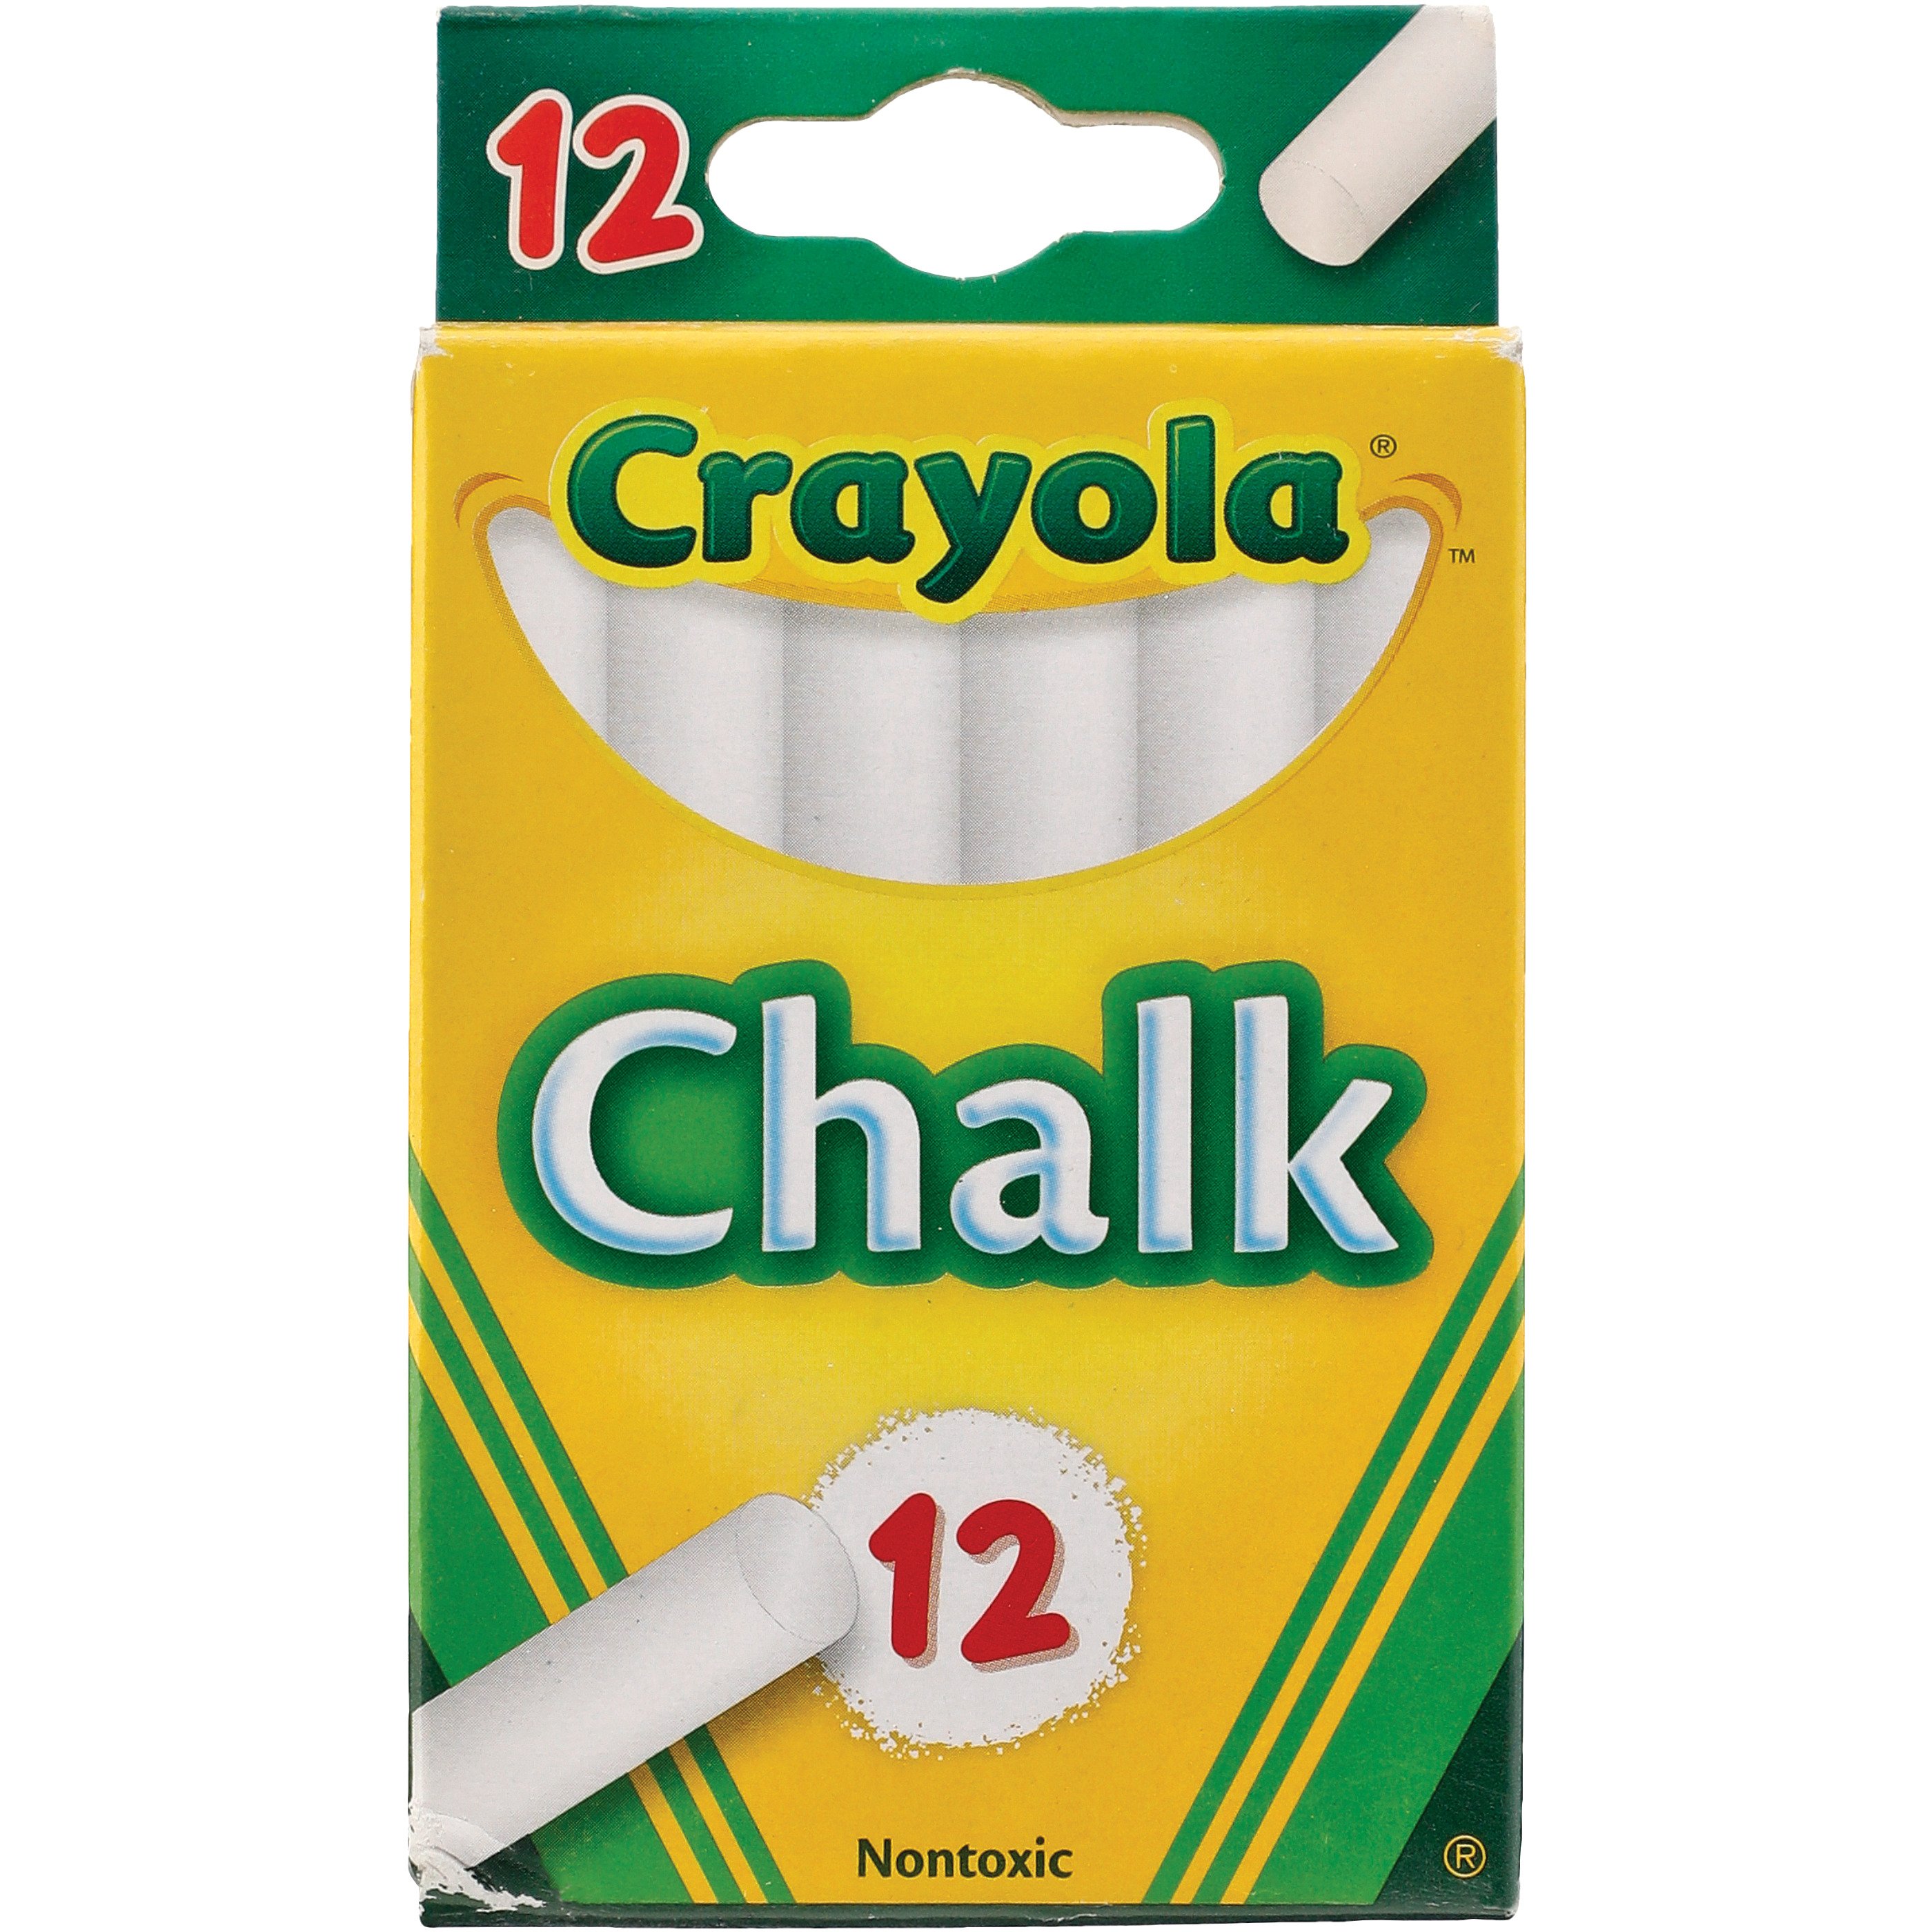 Crayola School Chalk - White